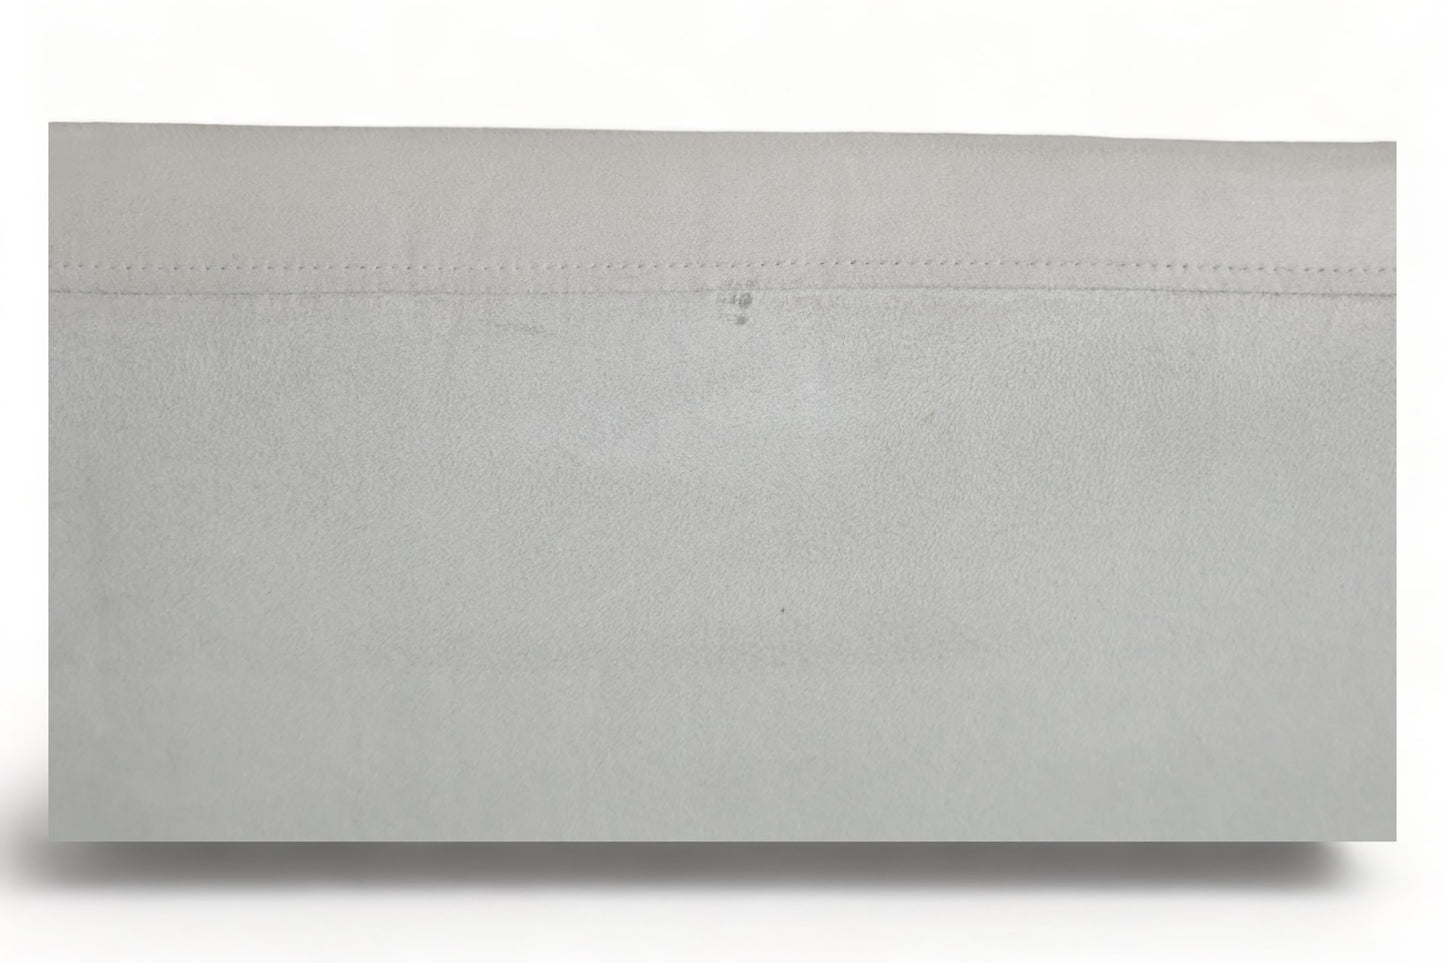 Nyrenset | Beige Raun 3-seter sofa med puff